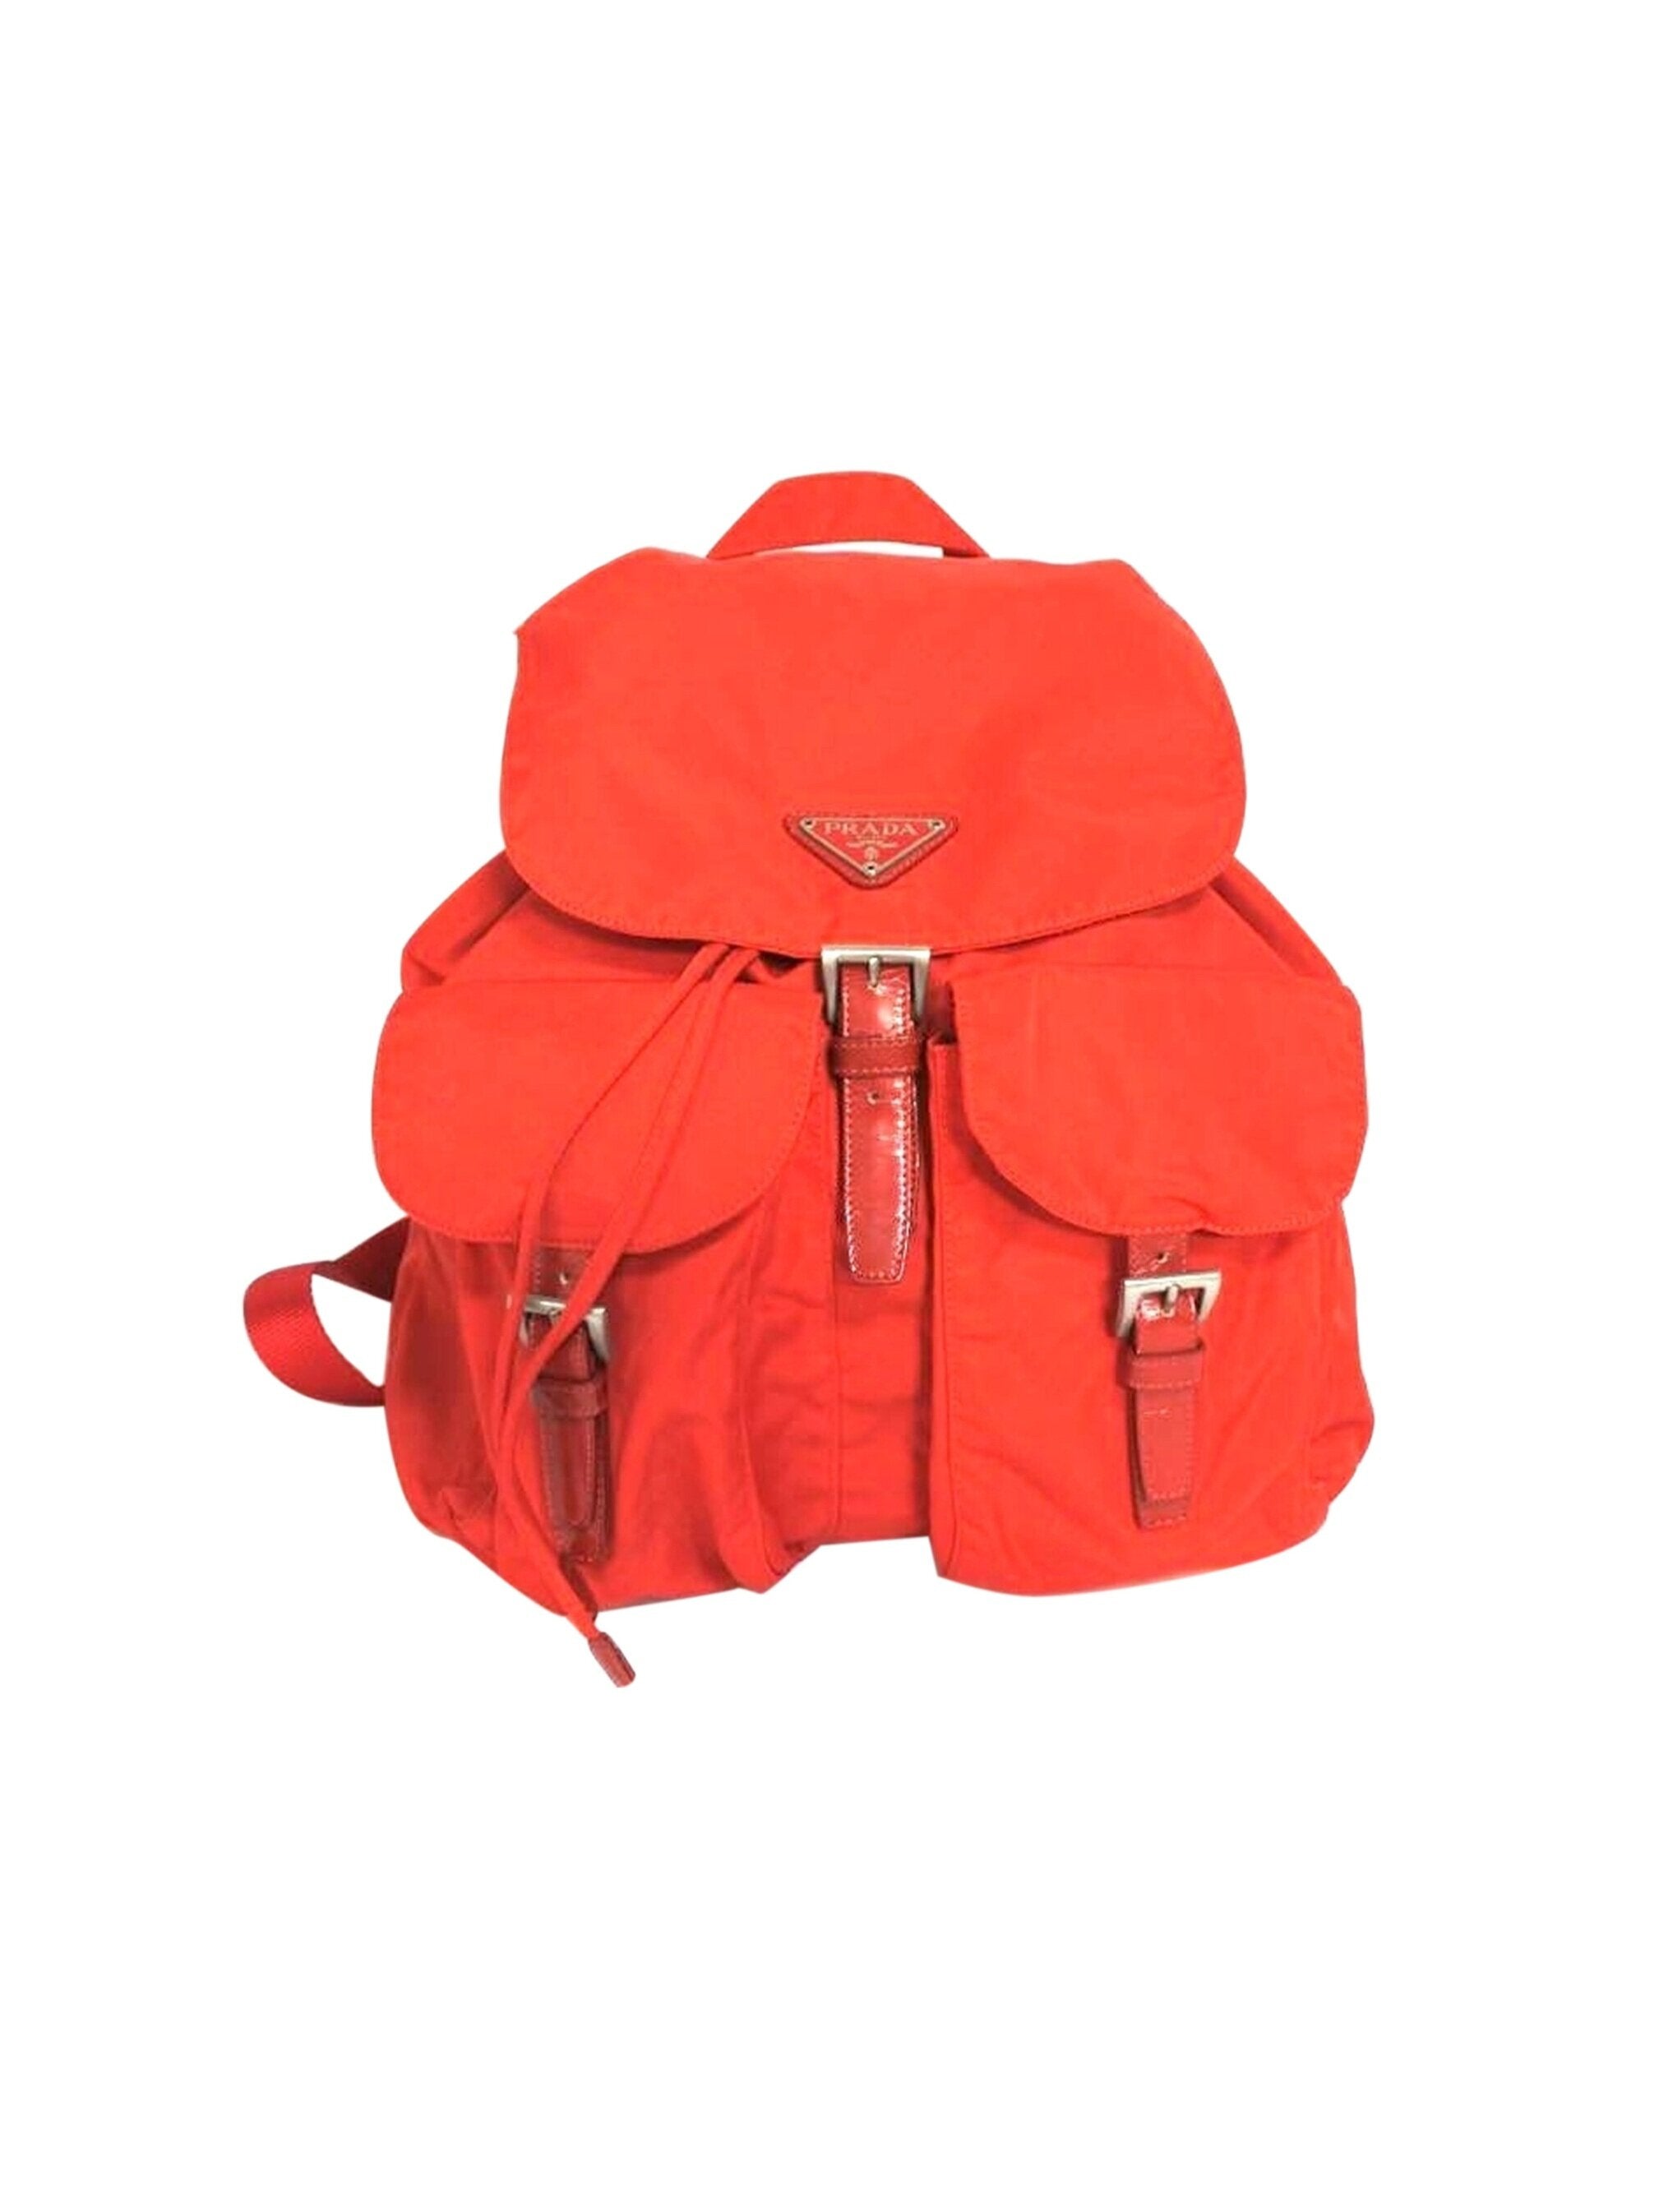 Prada Red Nylon Backpack